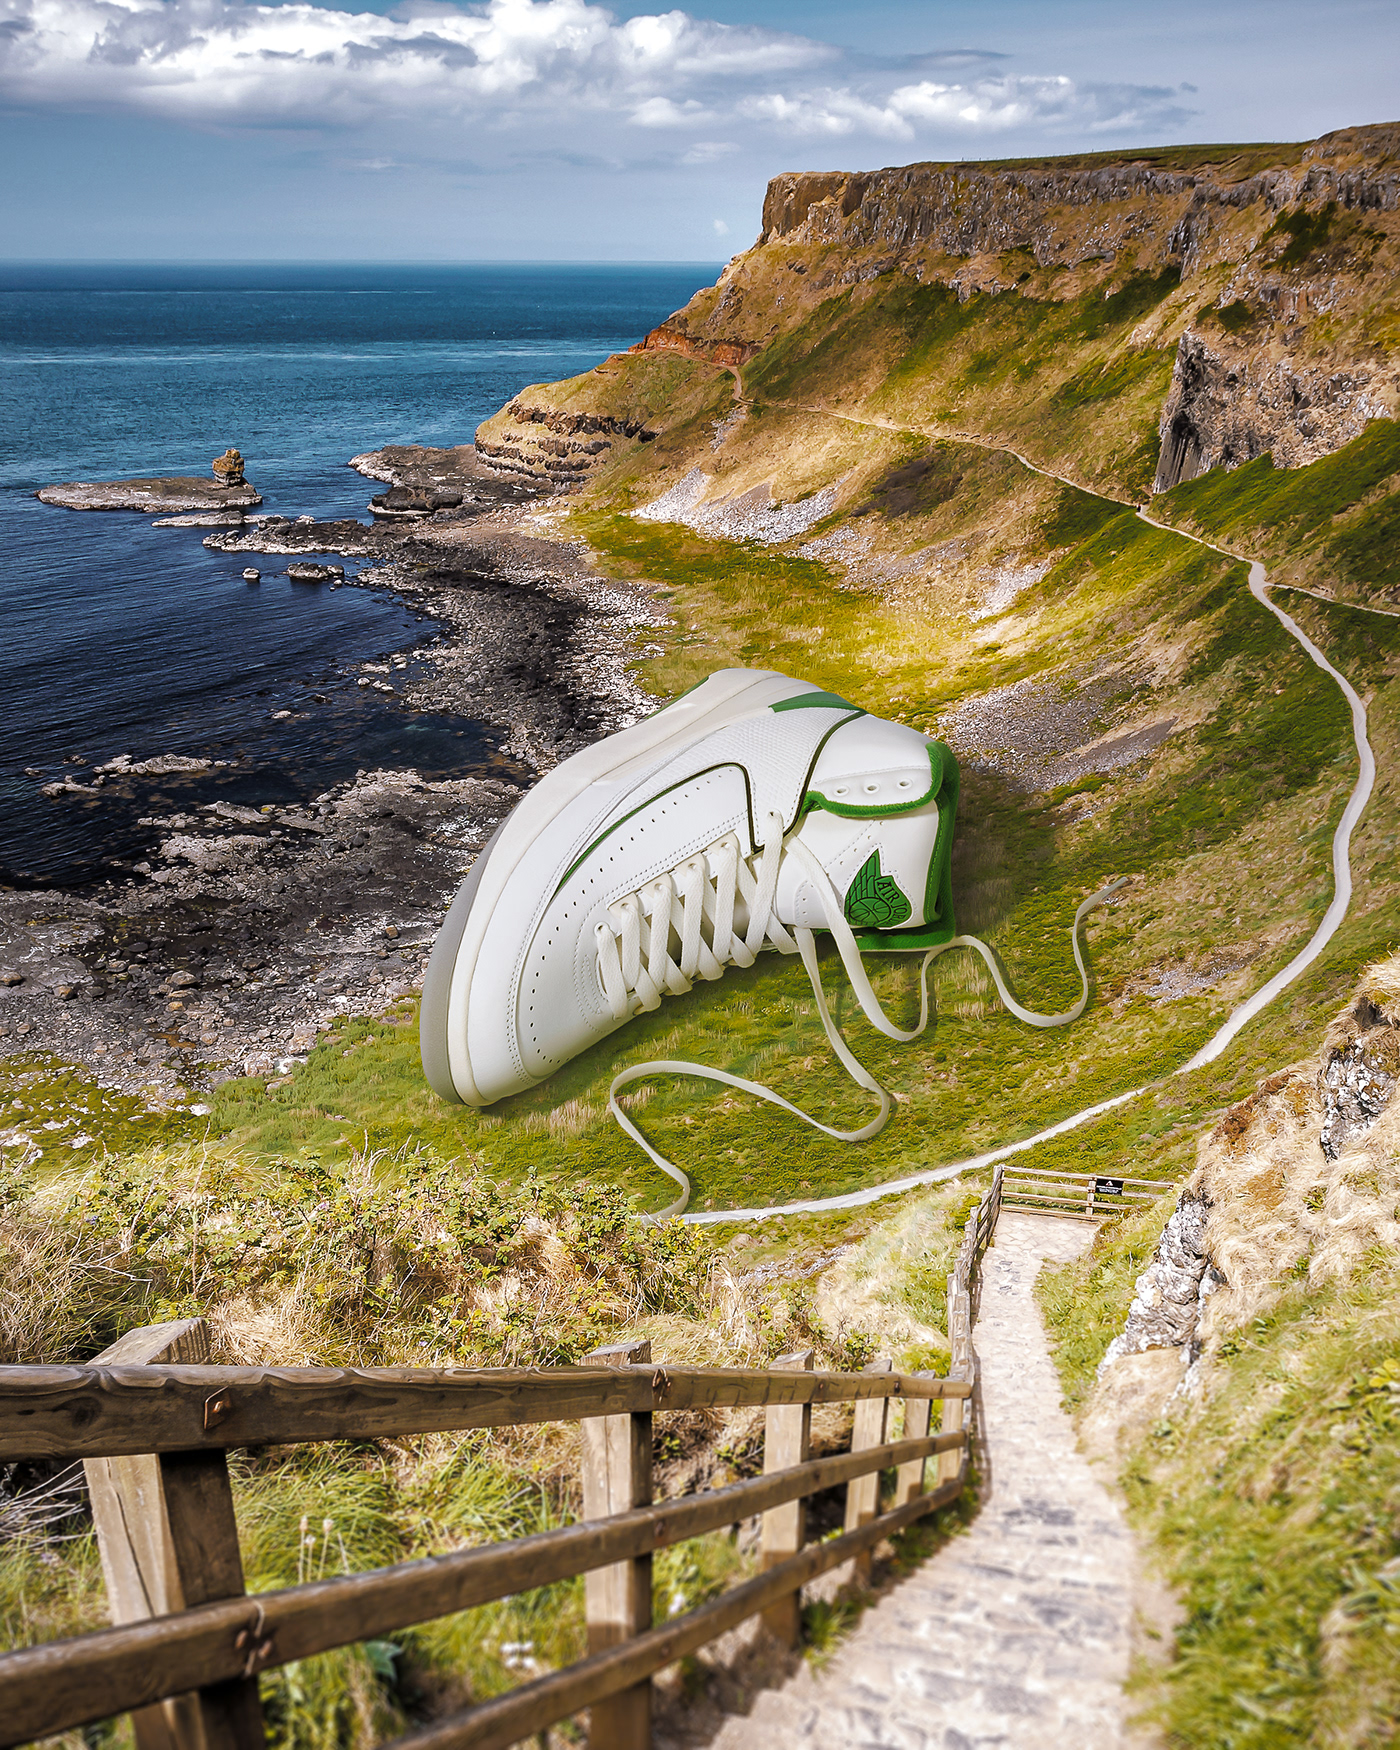 Giant sneaker photo composite next to the sea . Retouching using Photoshop